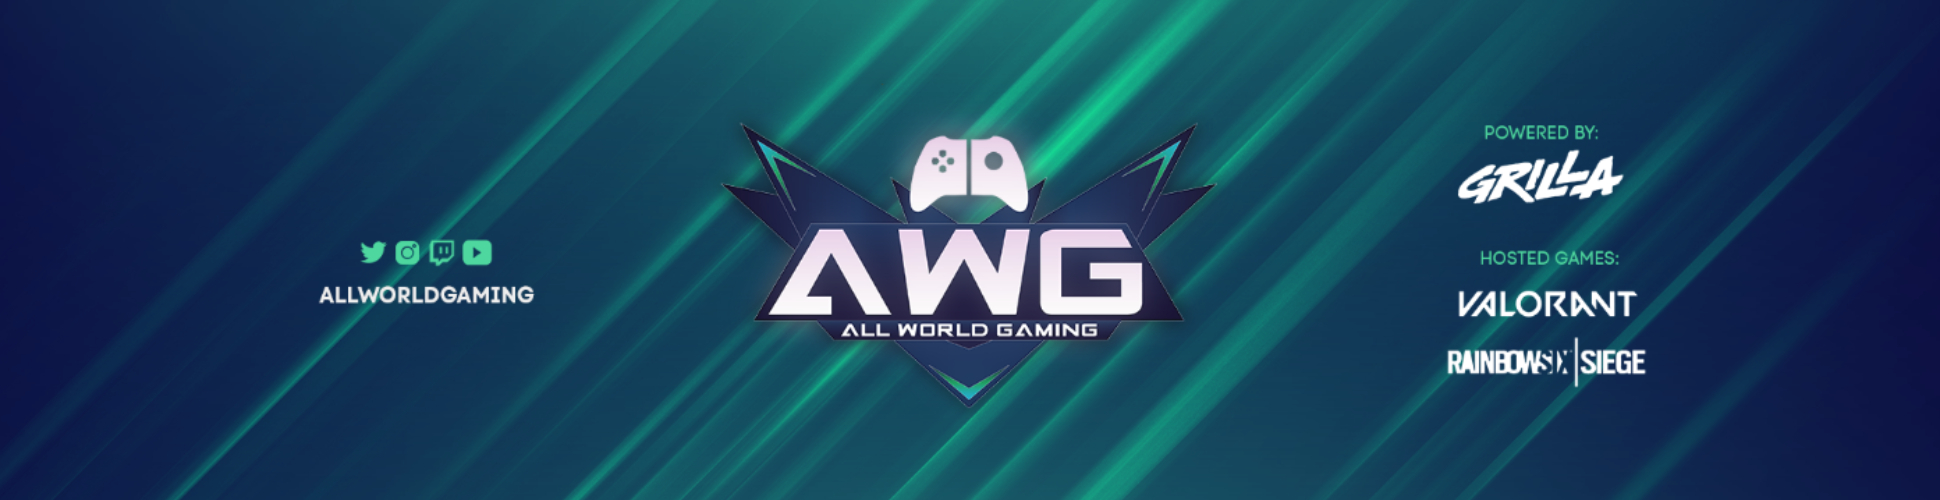 AWG's R6 Siege Qualifier 2 - 11/16